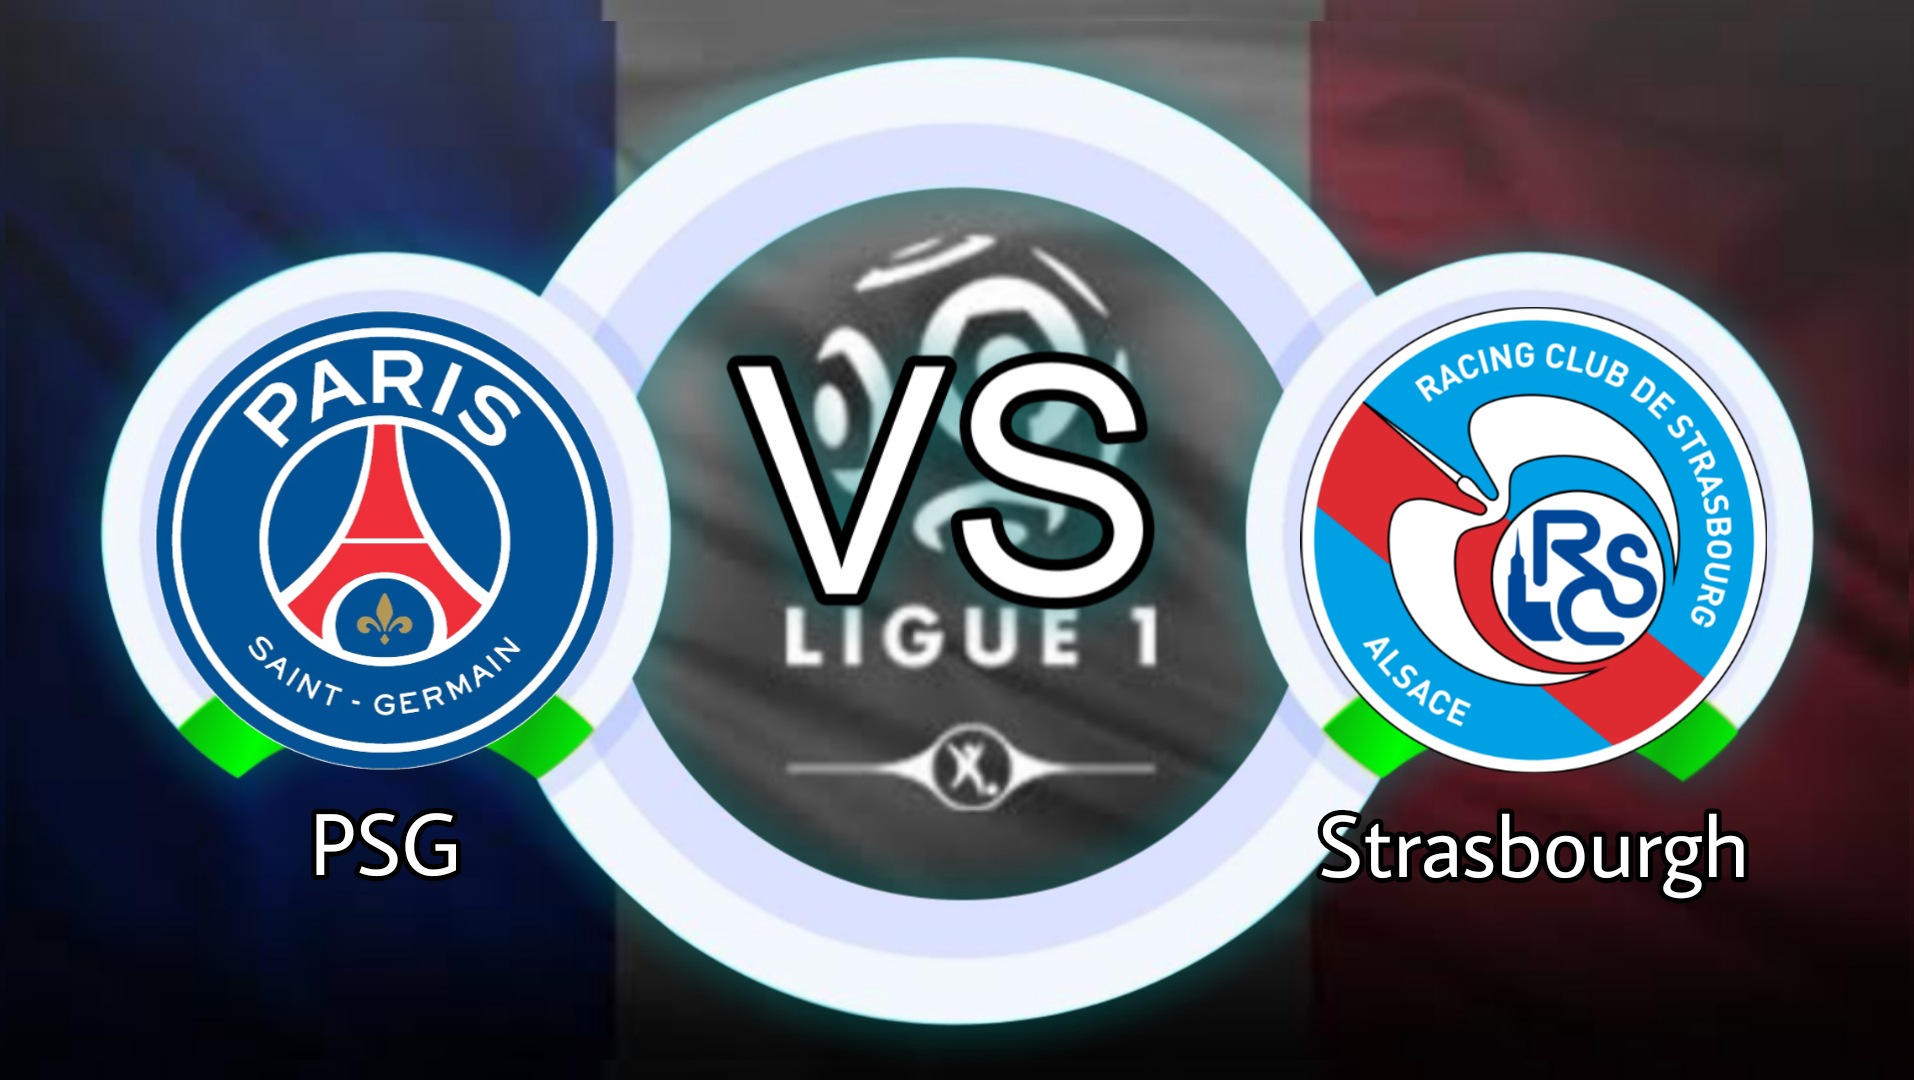 PSG Vs Strasbourg LIVE [ 1:30 AM ] - Football Group